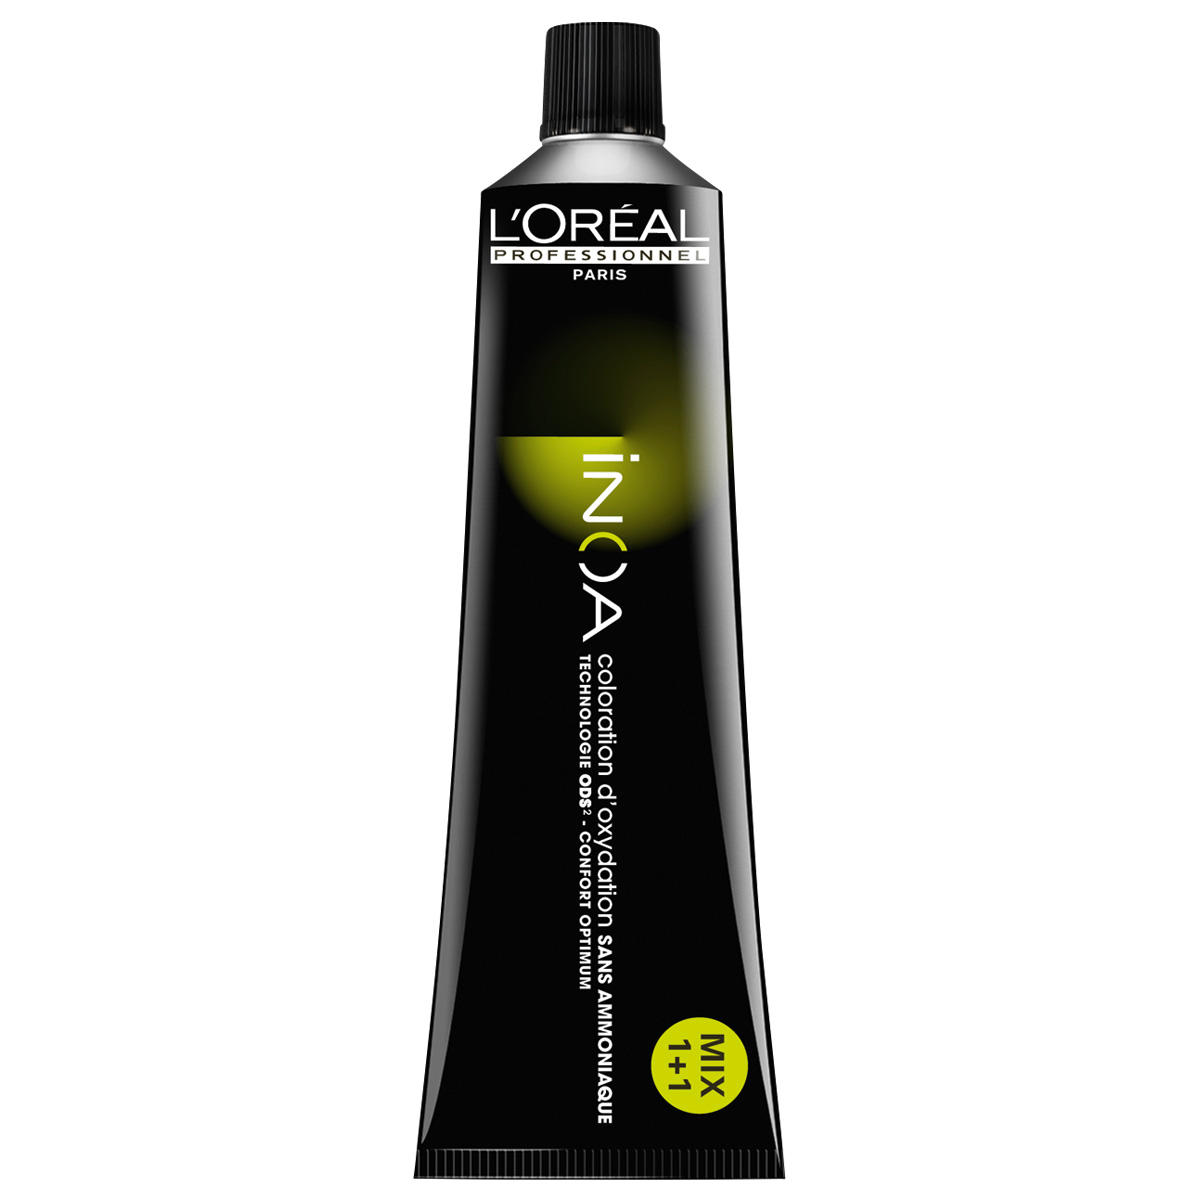 L'Oréal Professionnel Paris Coloration 5,64 Marrón claro cobrizo intenso, tubo 60 ml